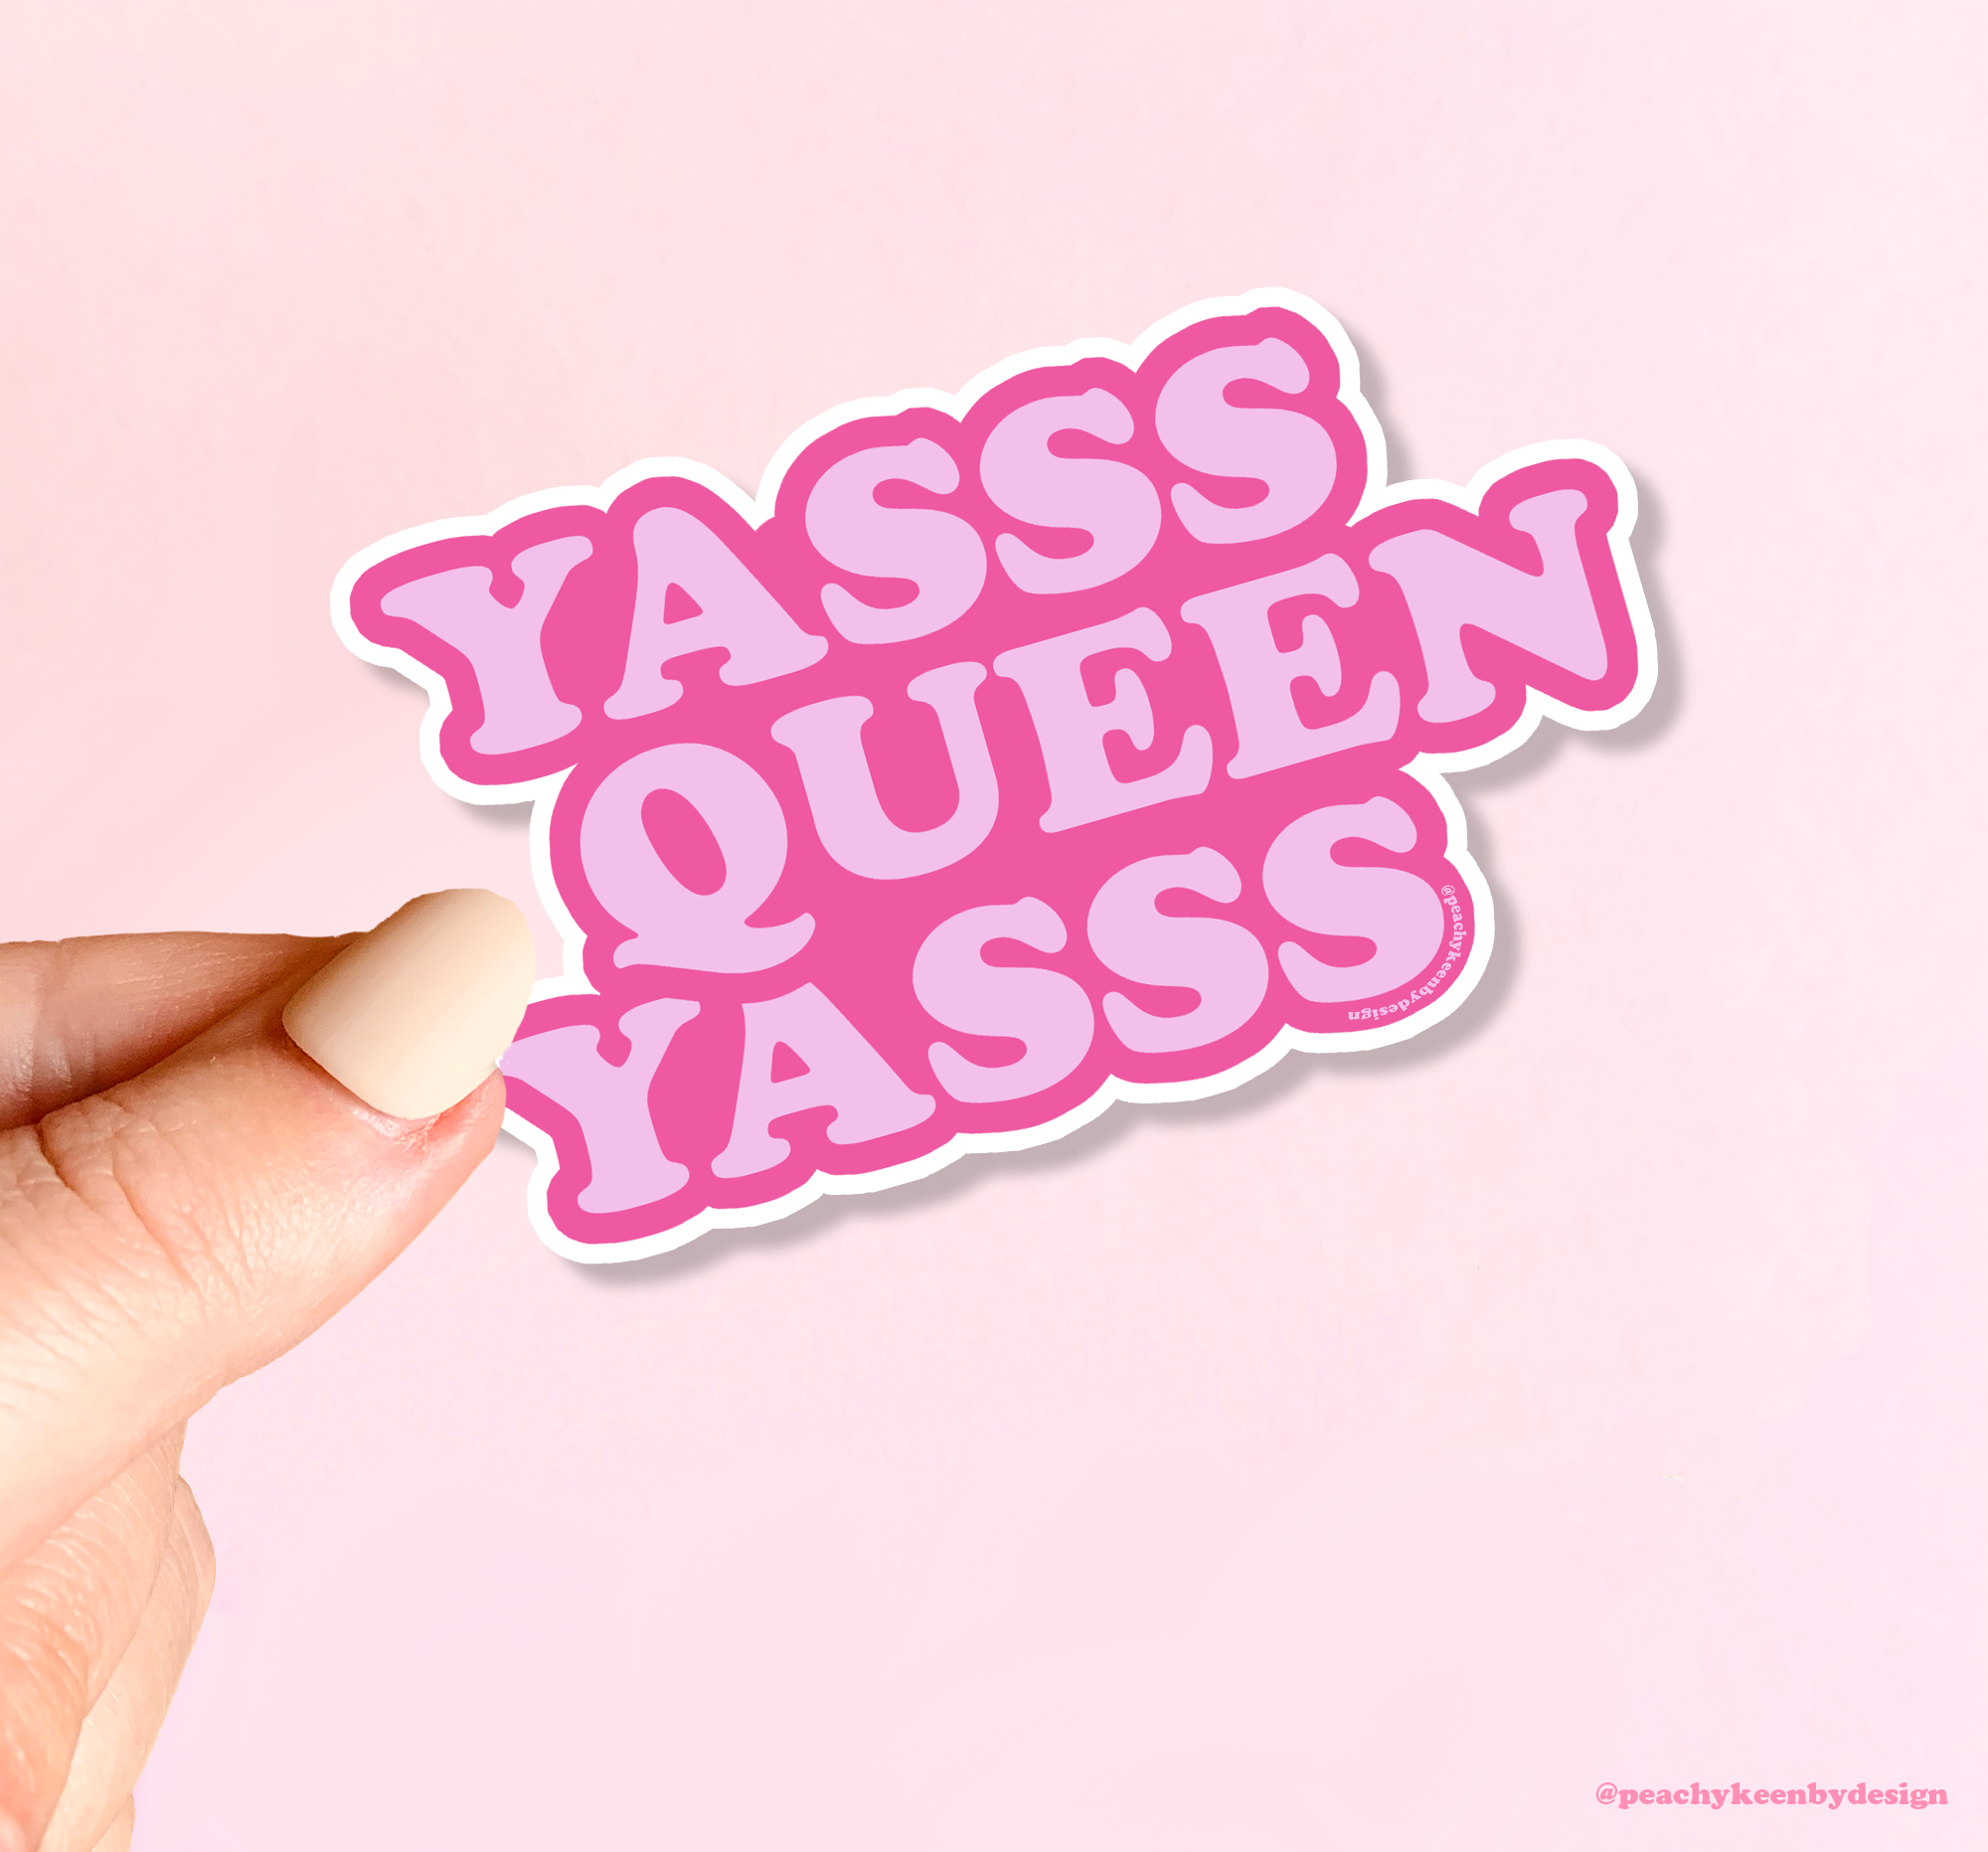 Yasss Queen Yasss  - Waterproof Vinyl Sticker